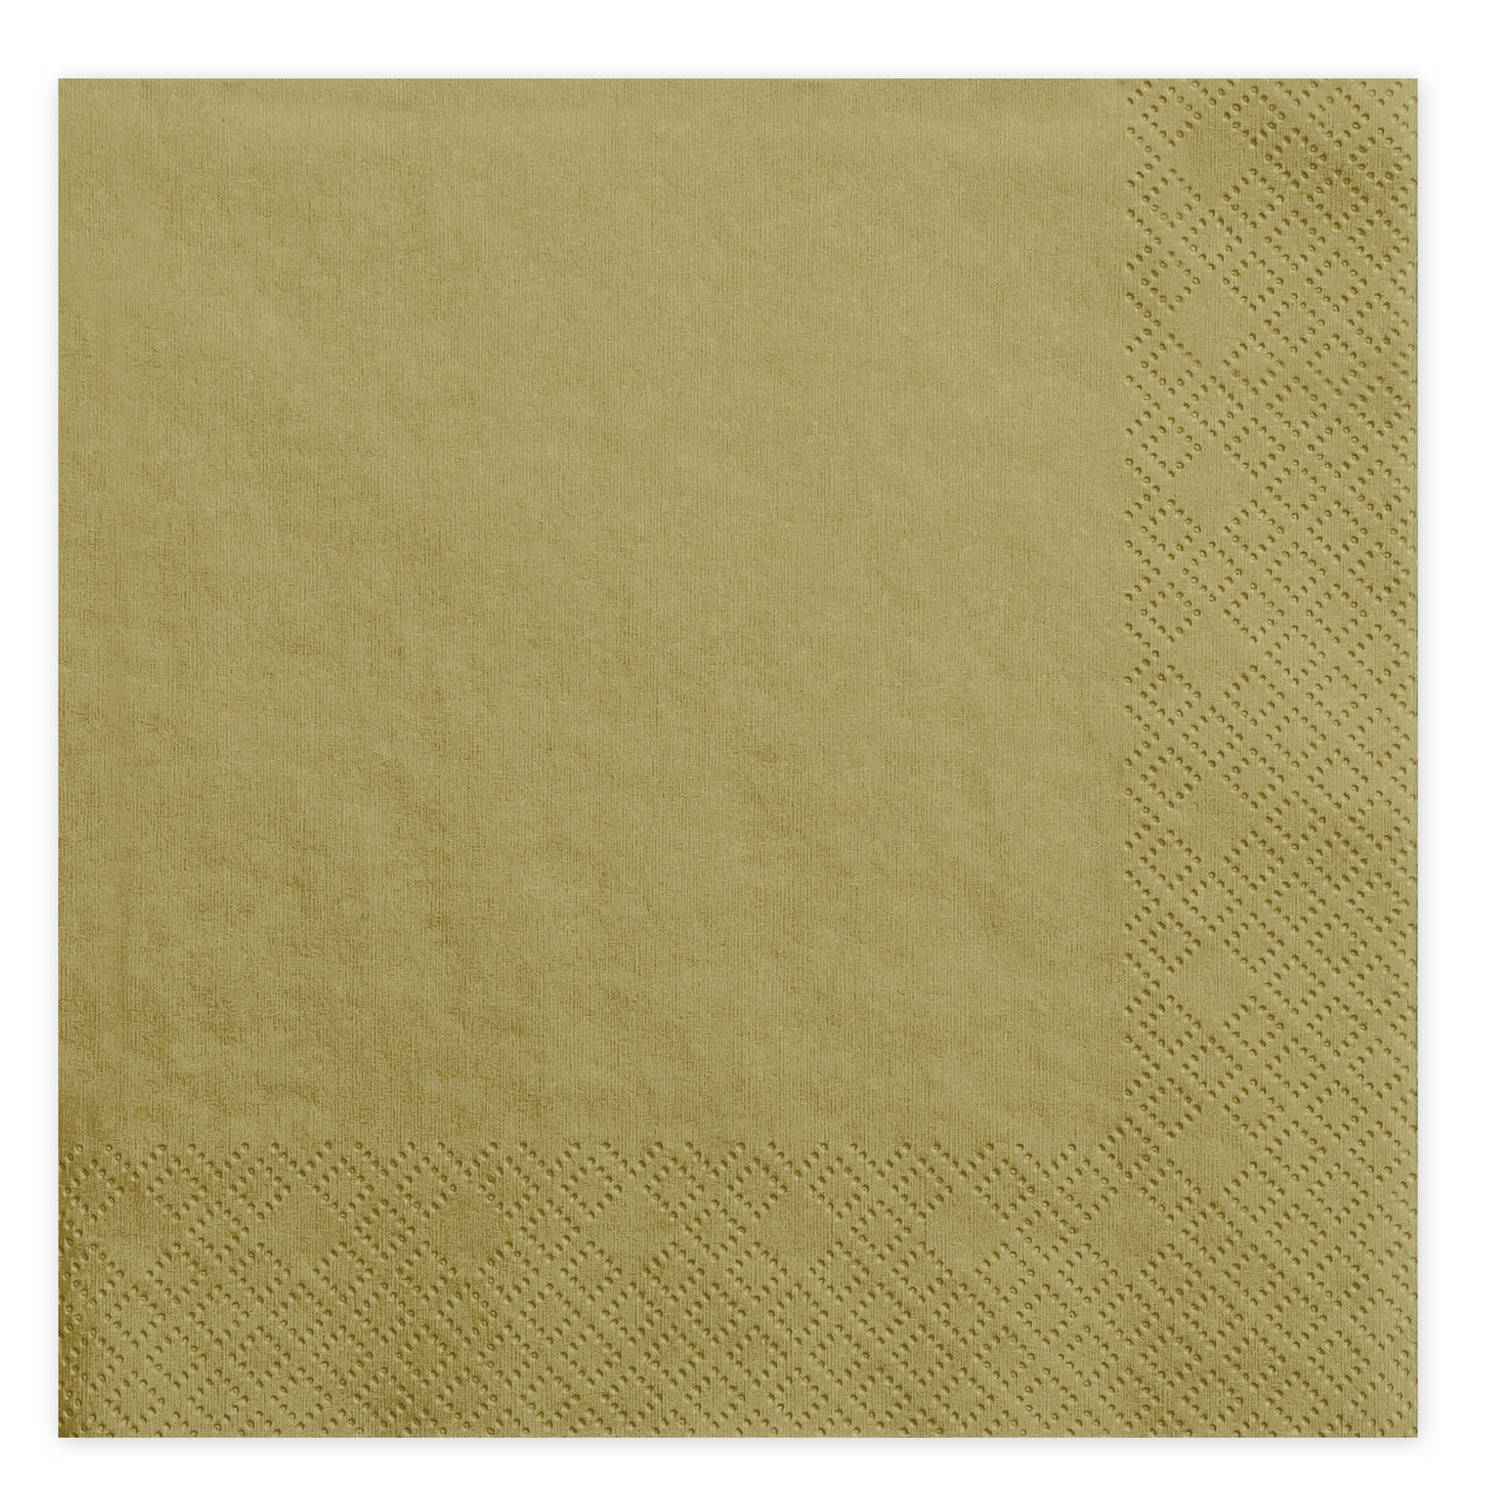 20x Papieren tafel servetten goud kleurig 33 x 33 cm - Feestservetten